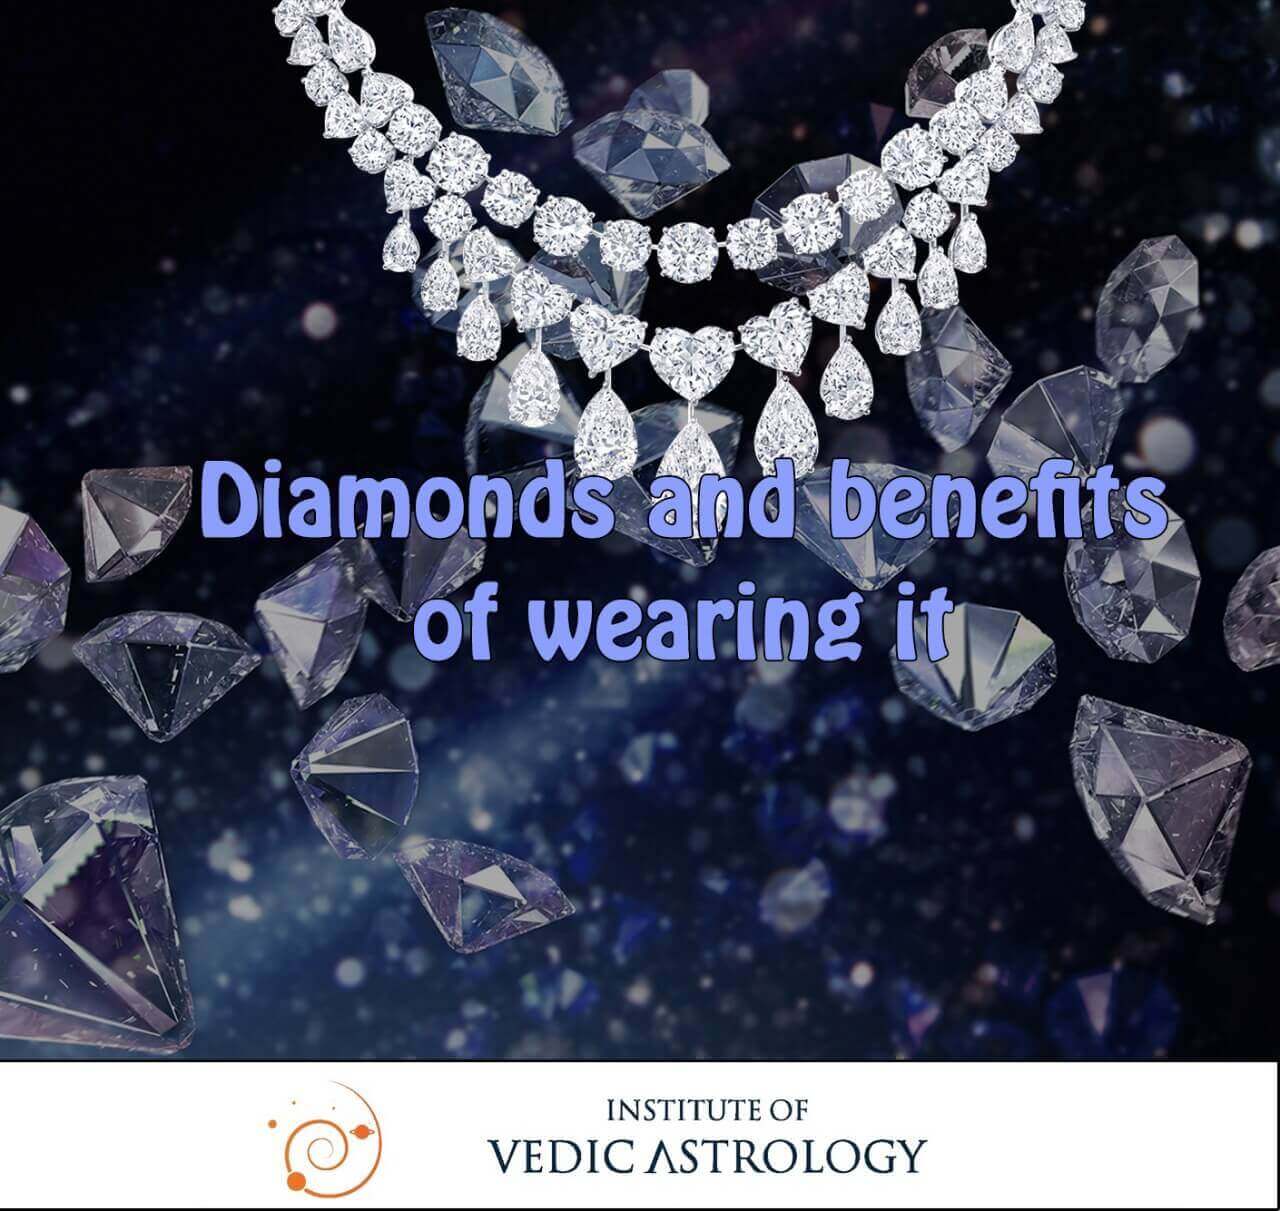 Diamonds, and benefits of wearing it